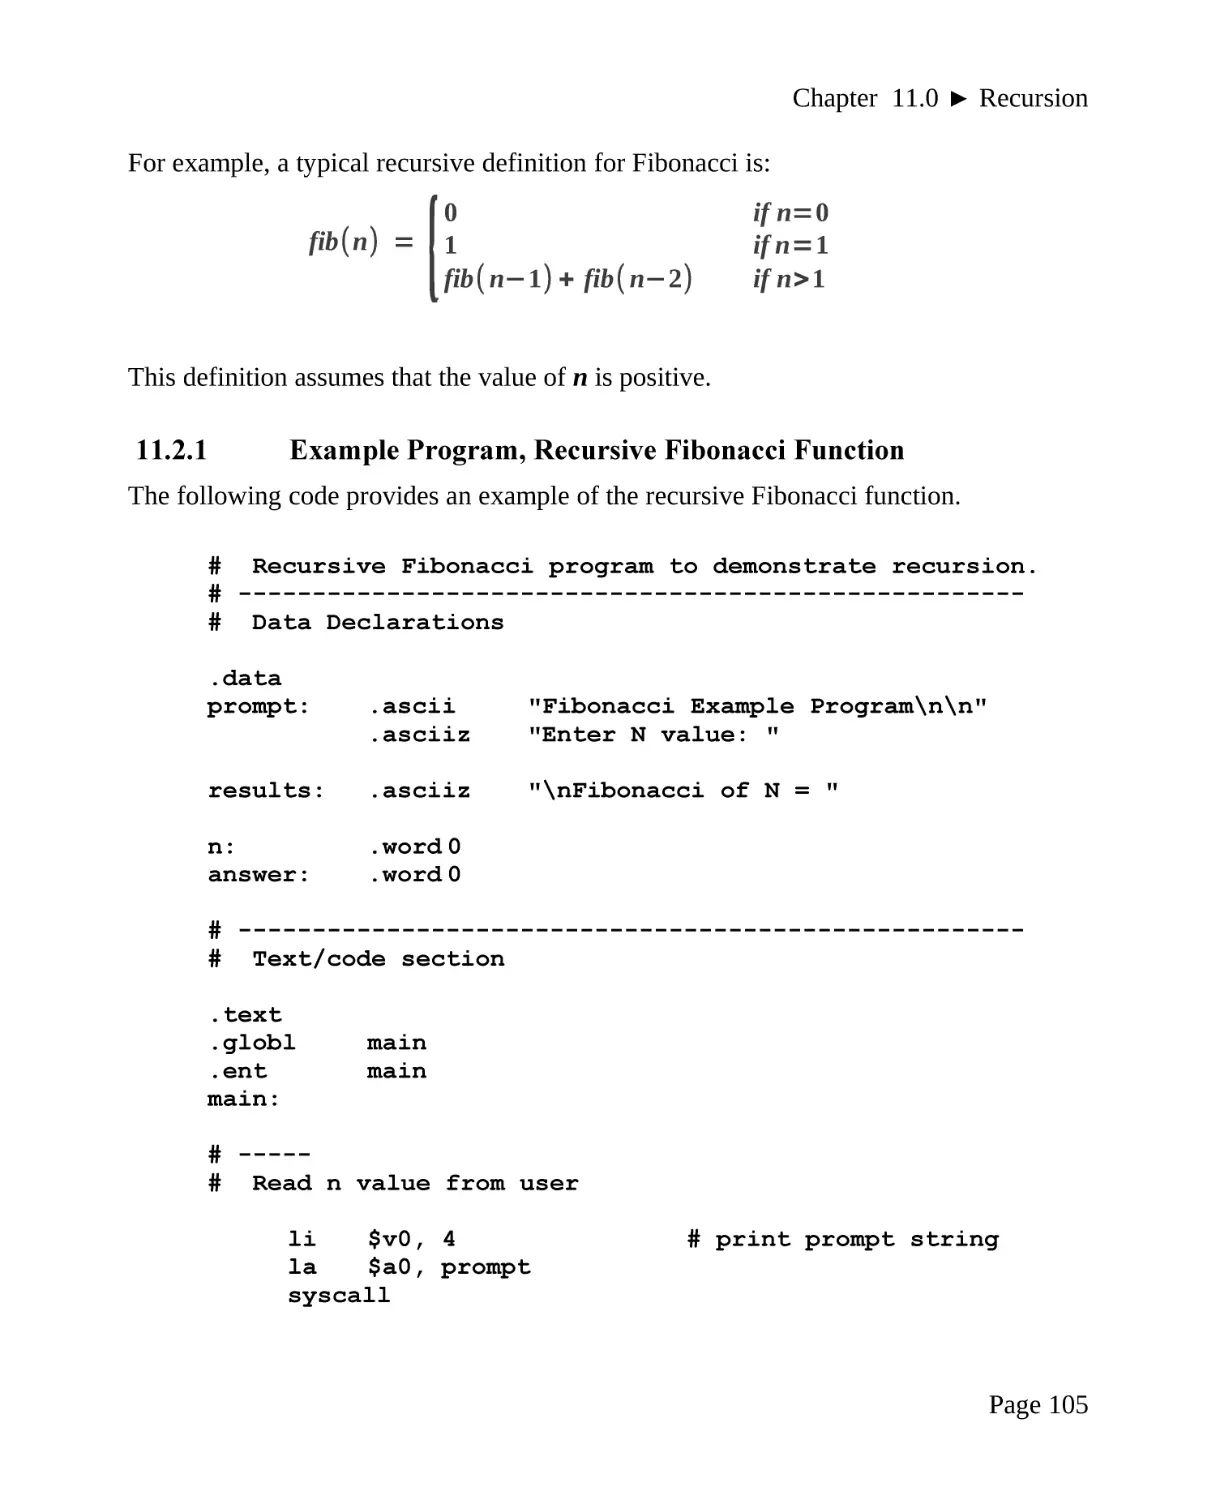 11.2.1 Example Program, Recursive Fibonacci Function